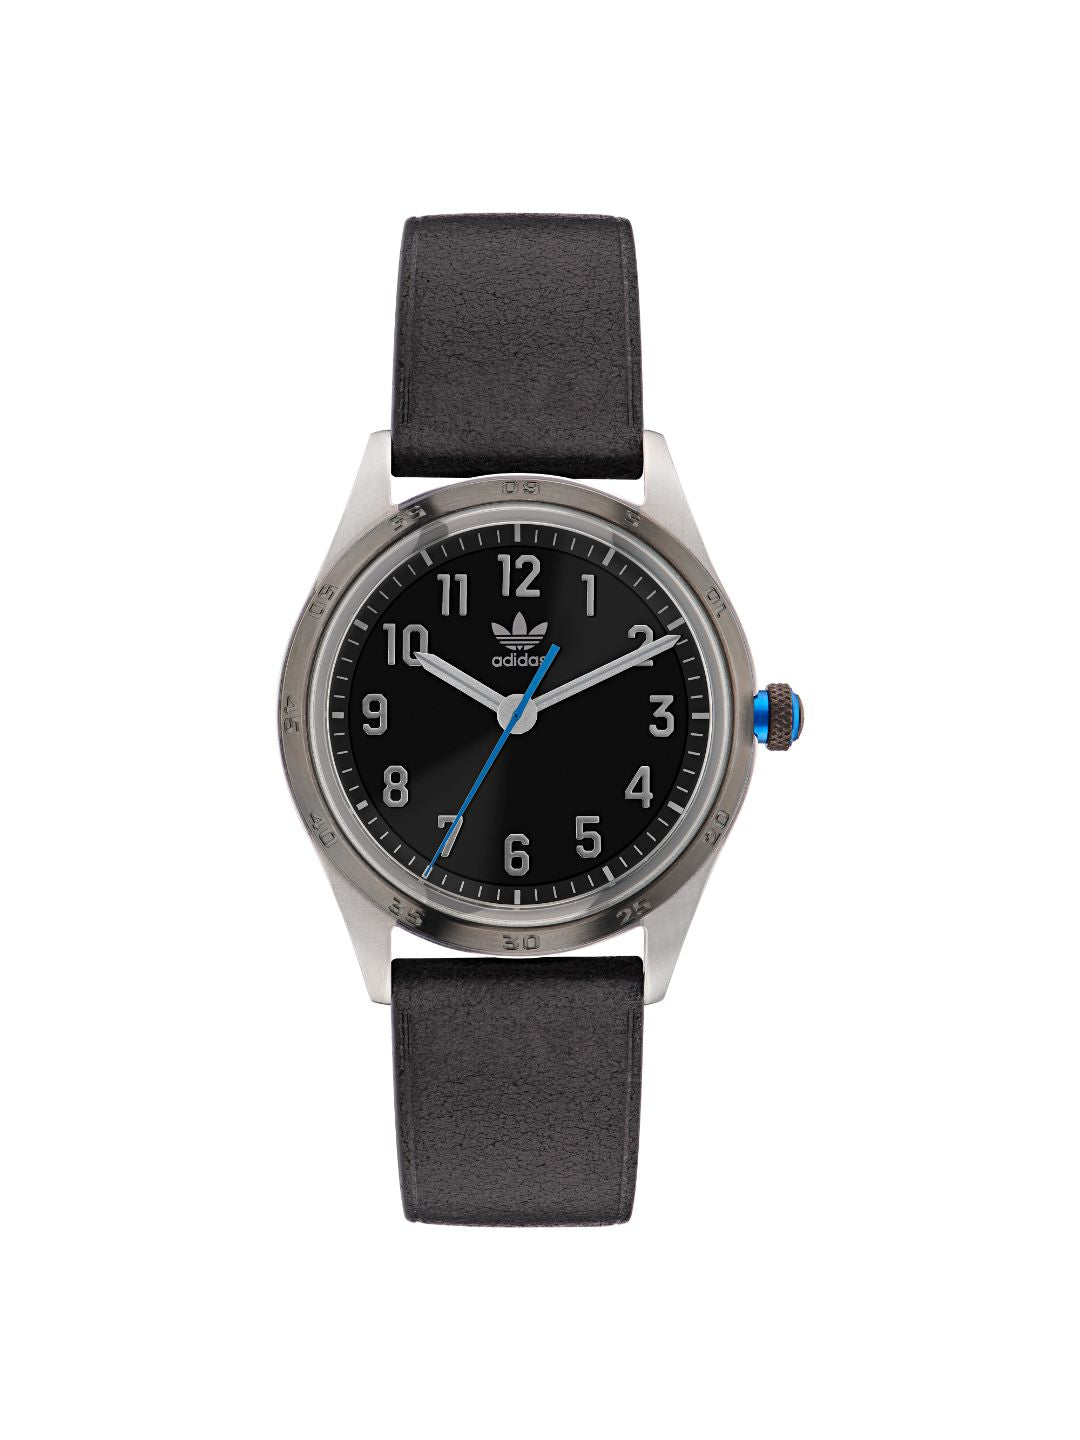 Adidas Originals Black Dial Unisex Watch - AOSY22528